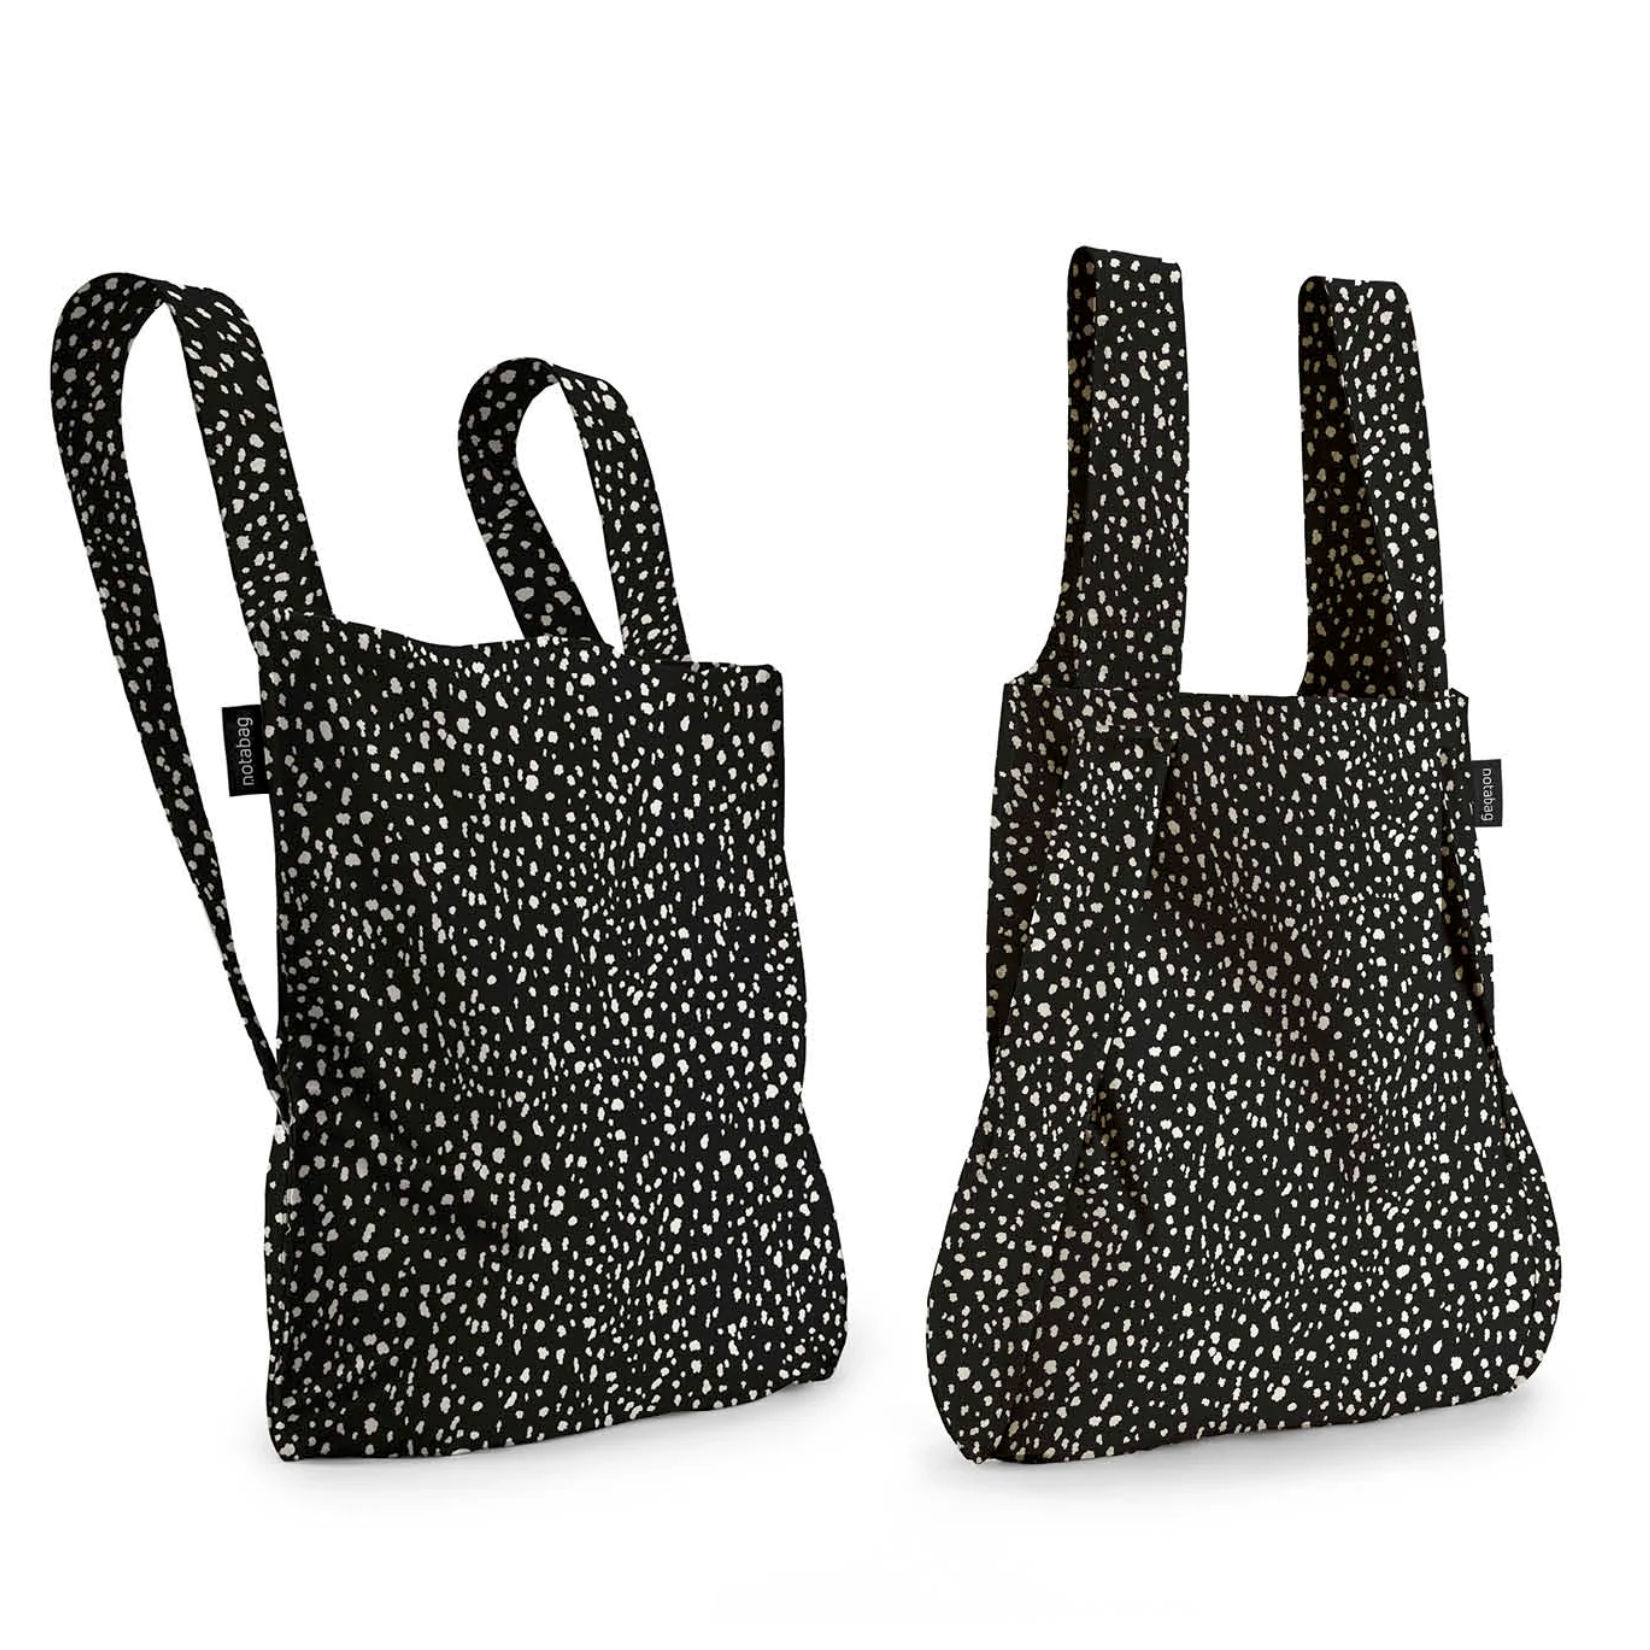 black foldable backpack